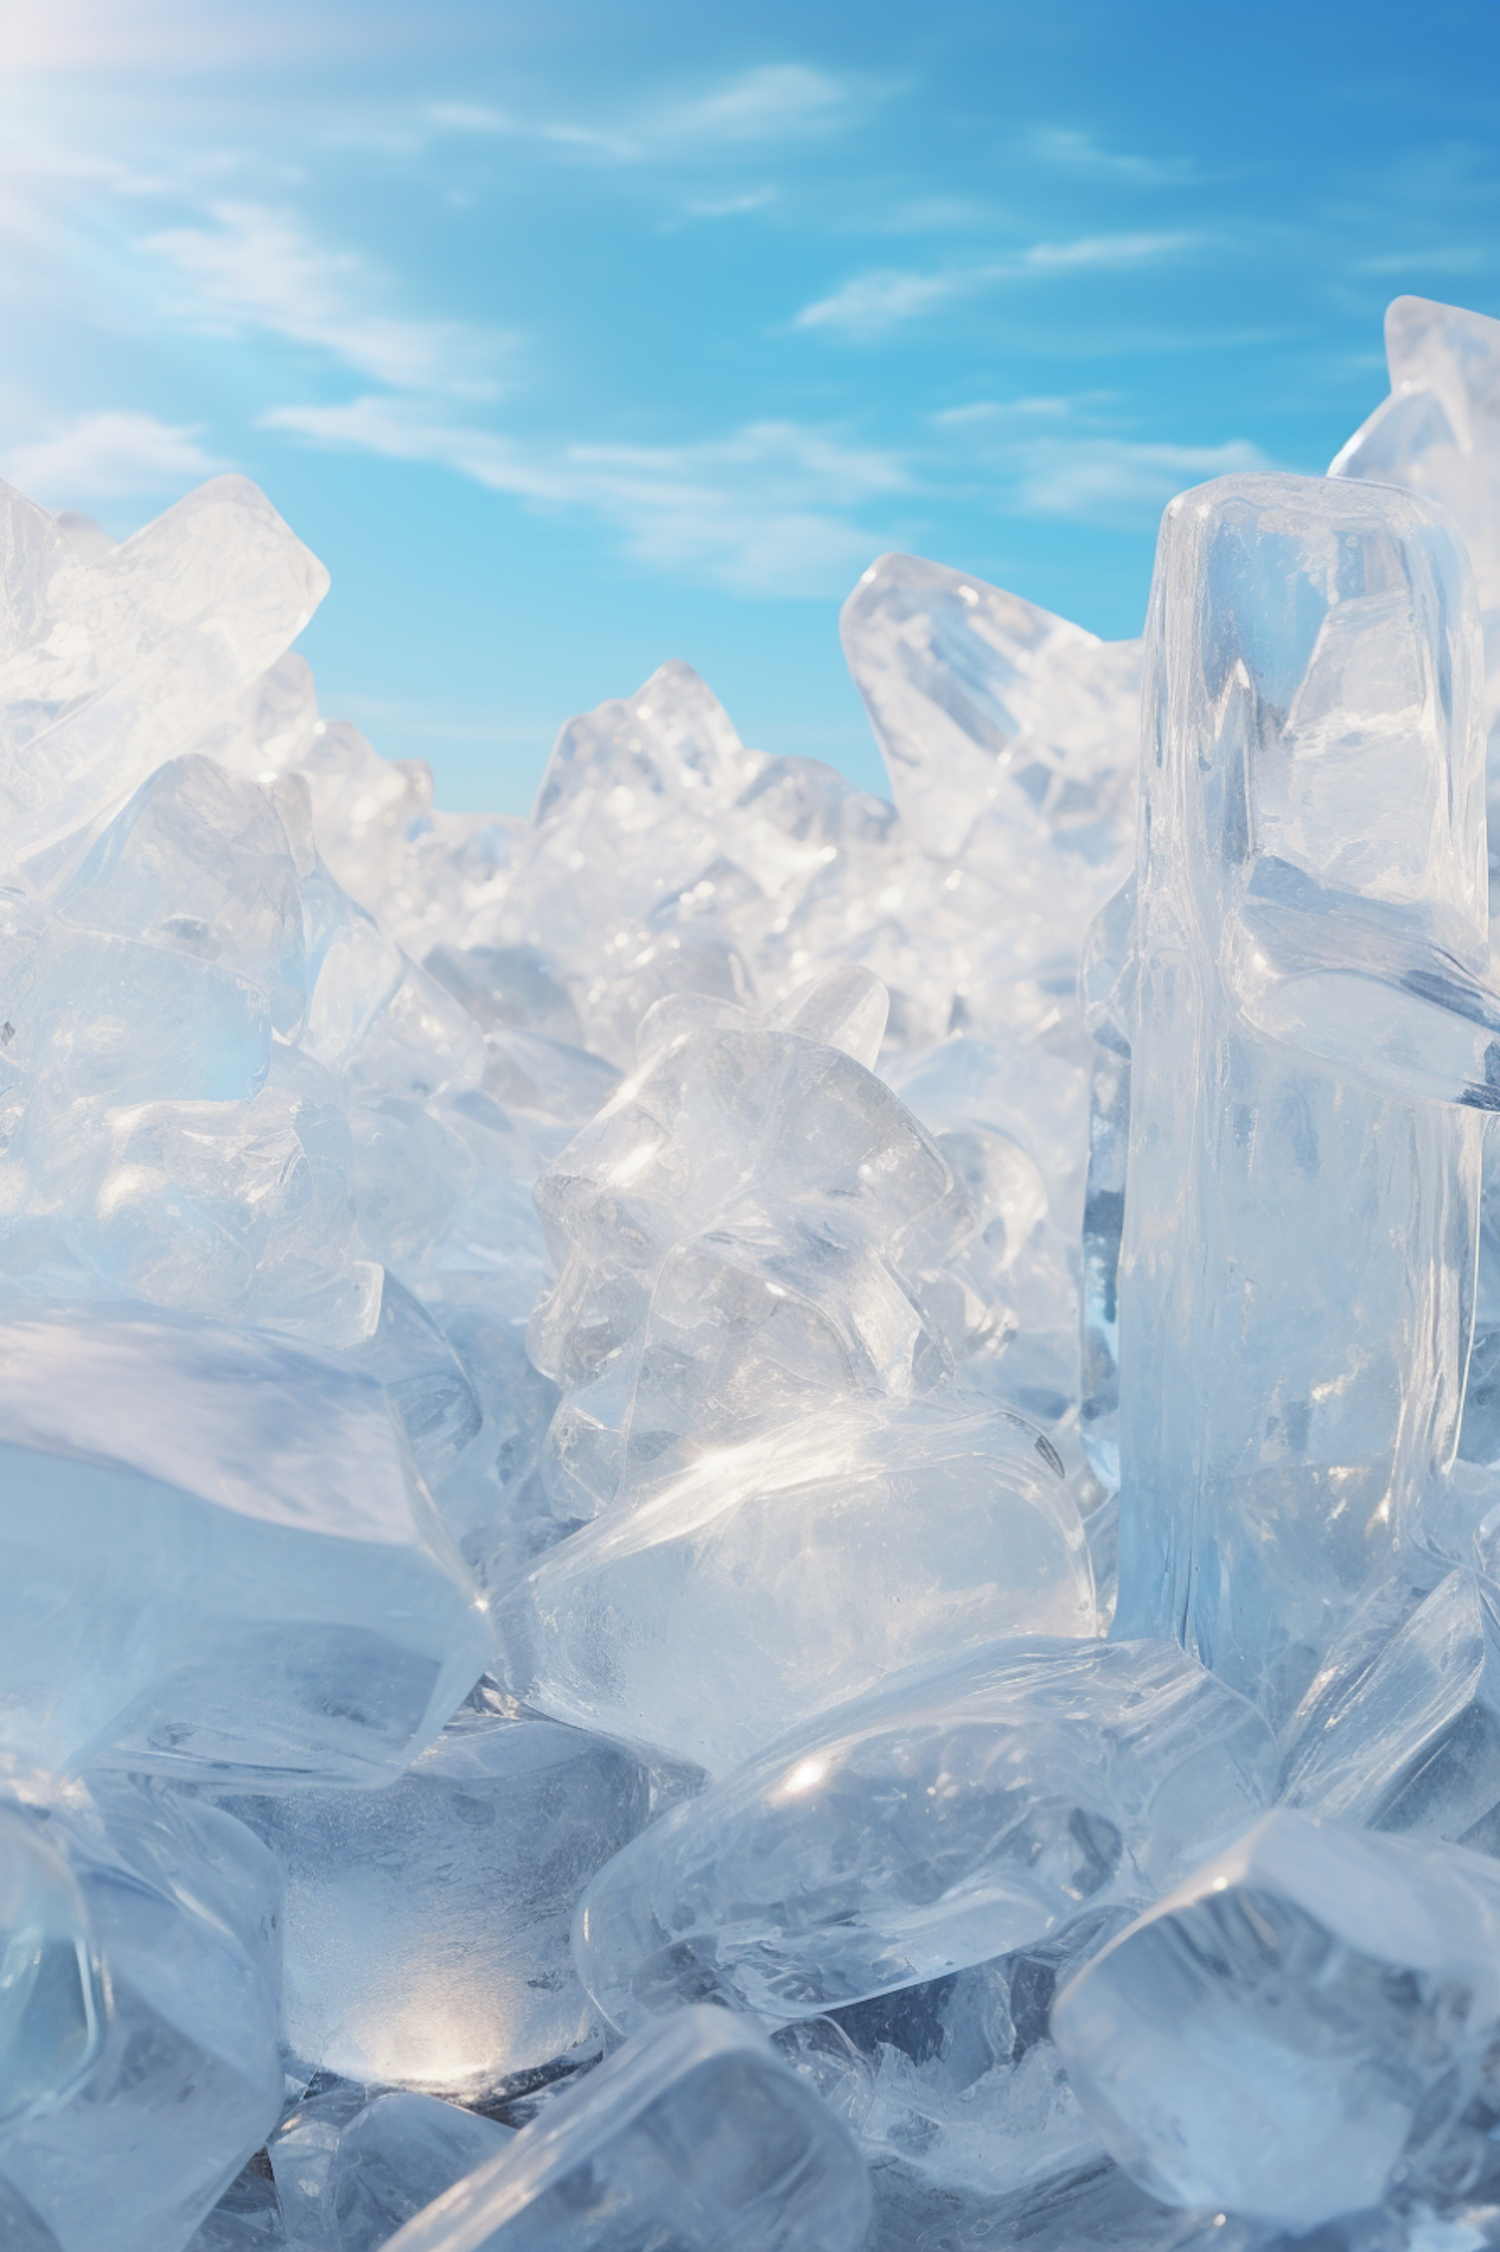 Crystal Serenity: A Frozen Landscape